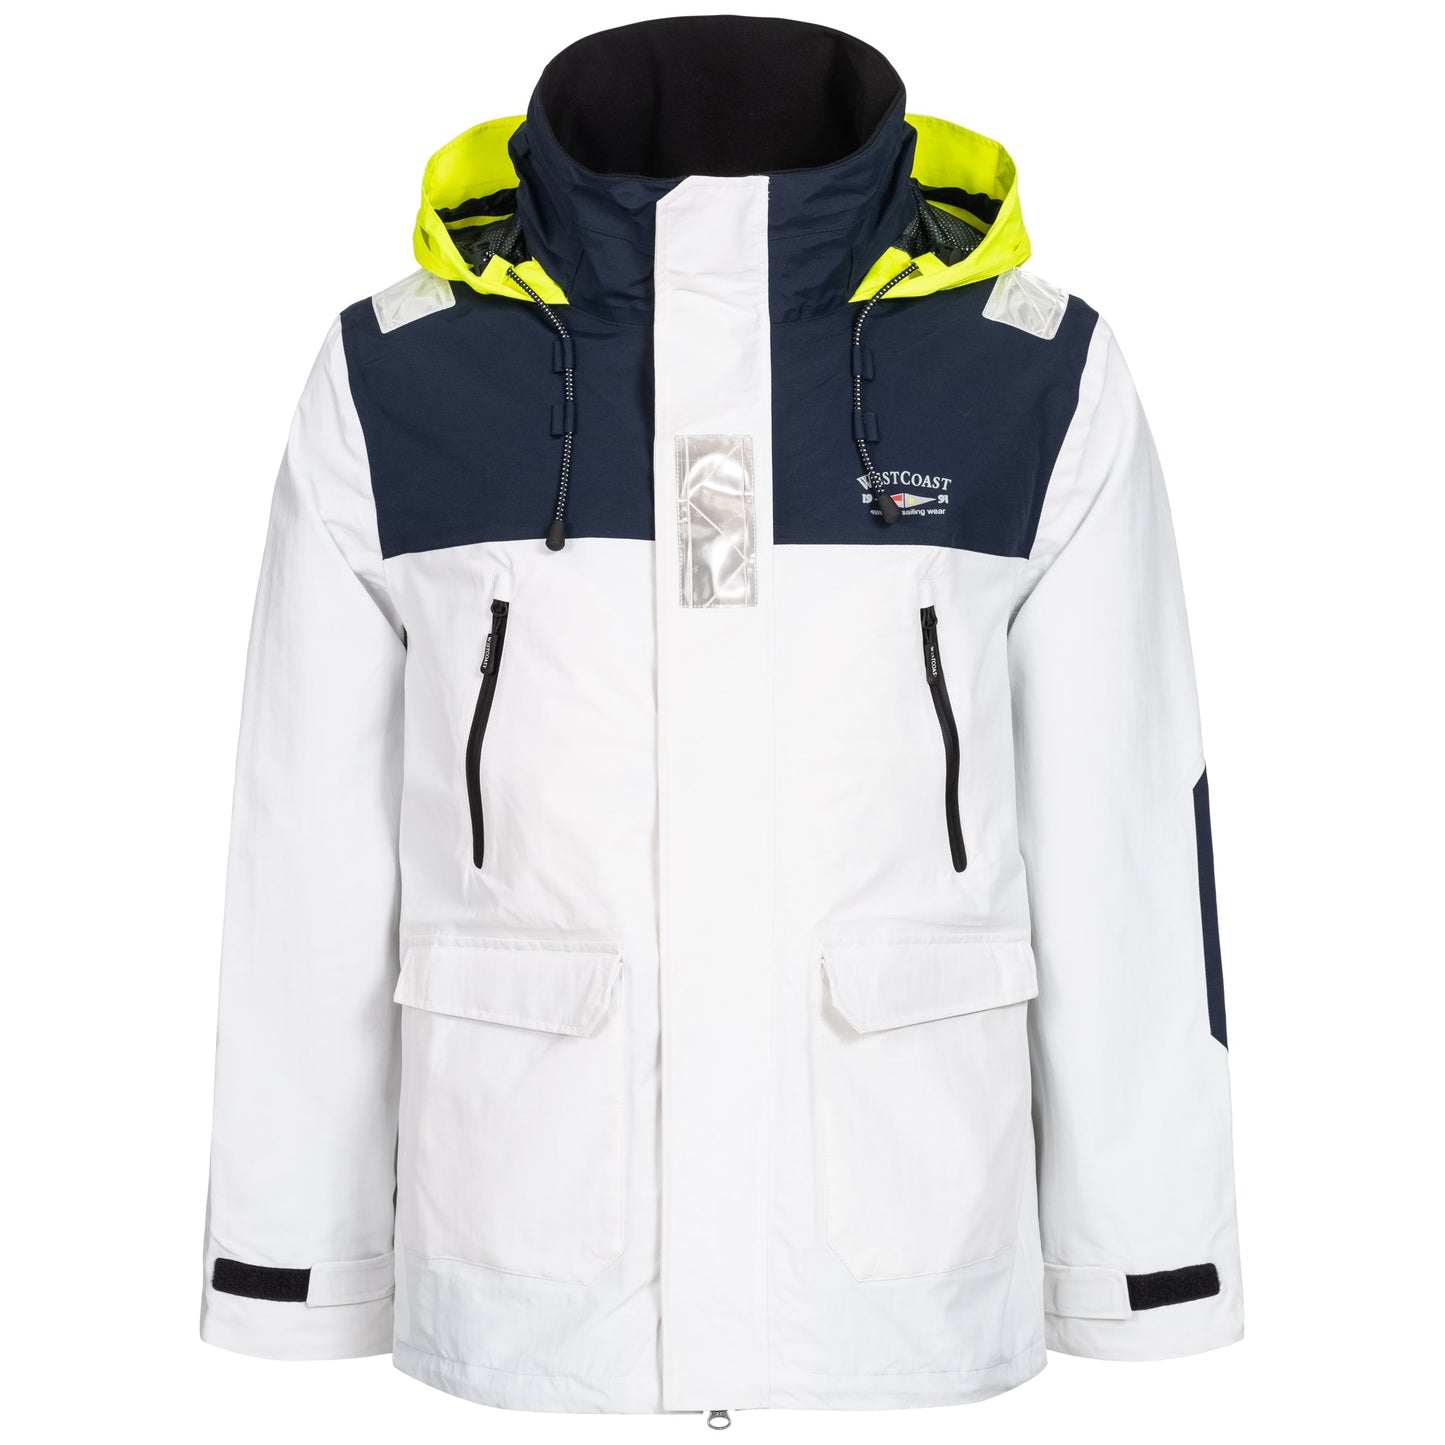 WESTCOAST Men's Foul Weather Gear COASTAL Jacket - WESTCOAST Swedish Sailingwear